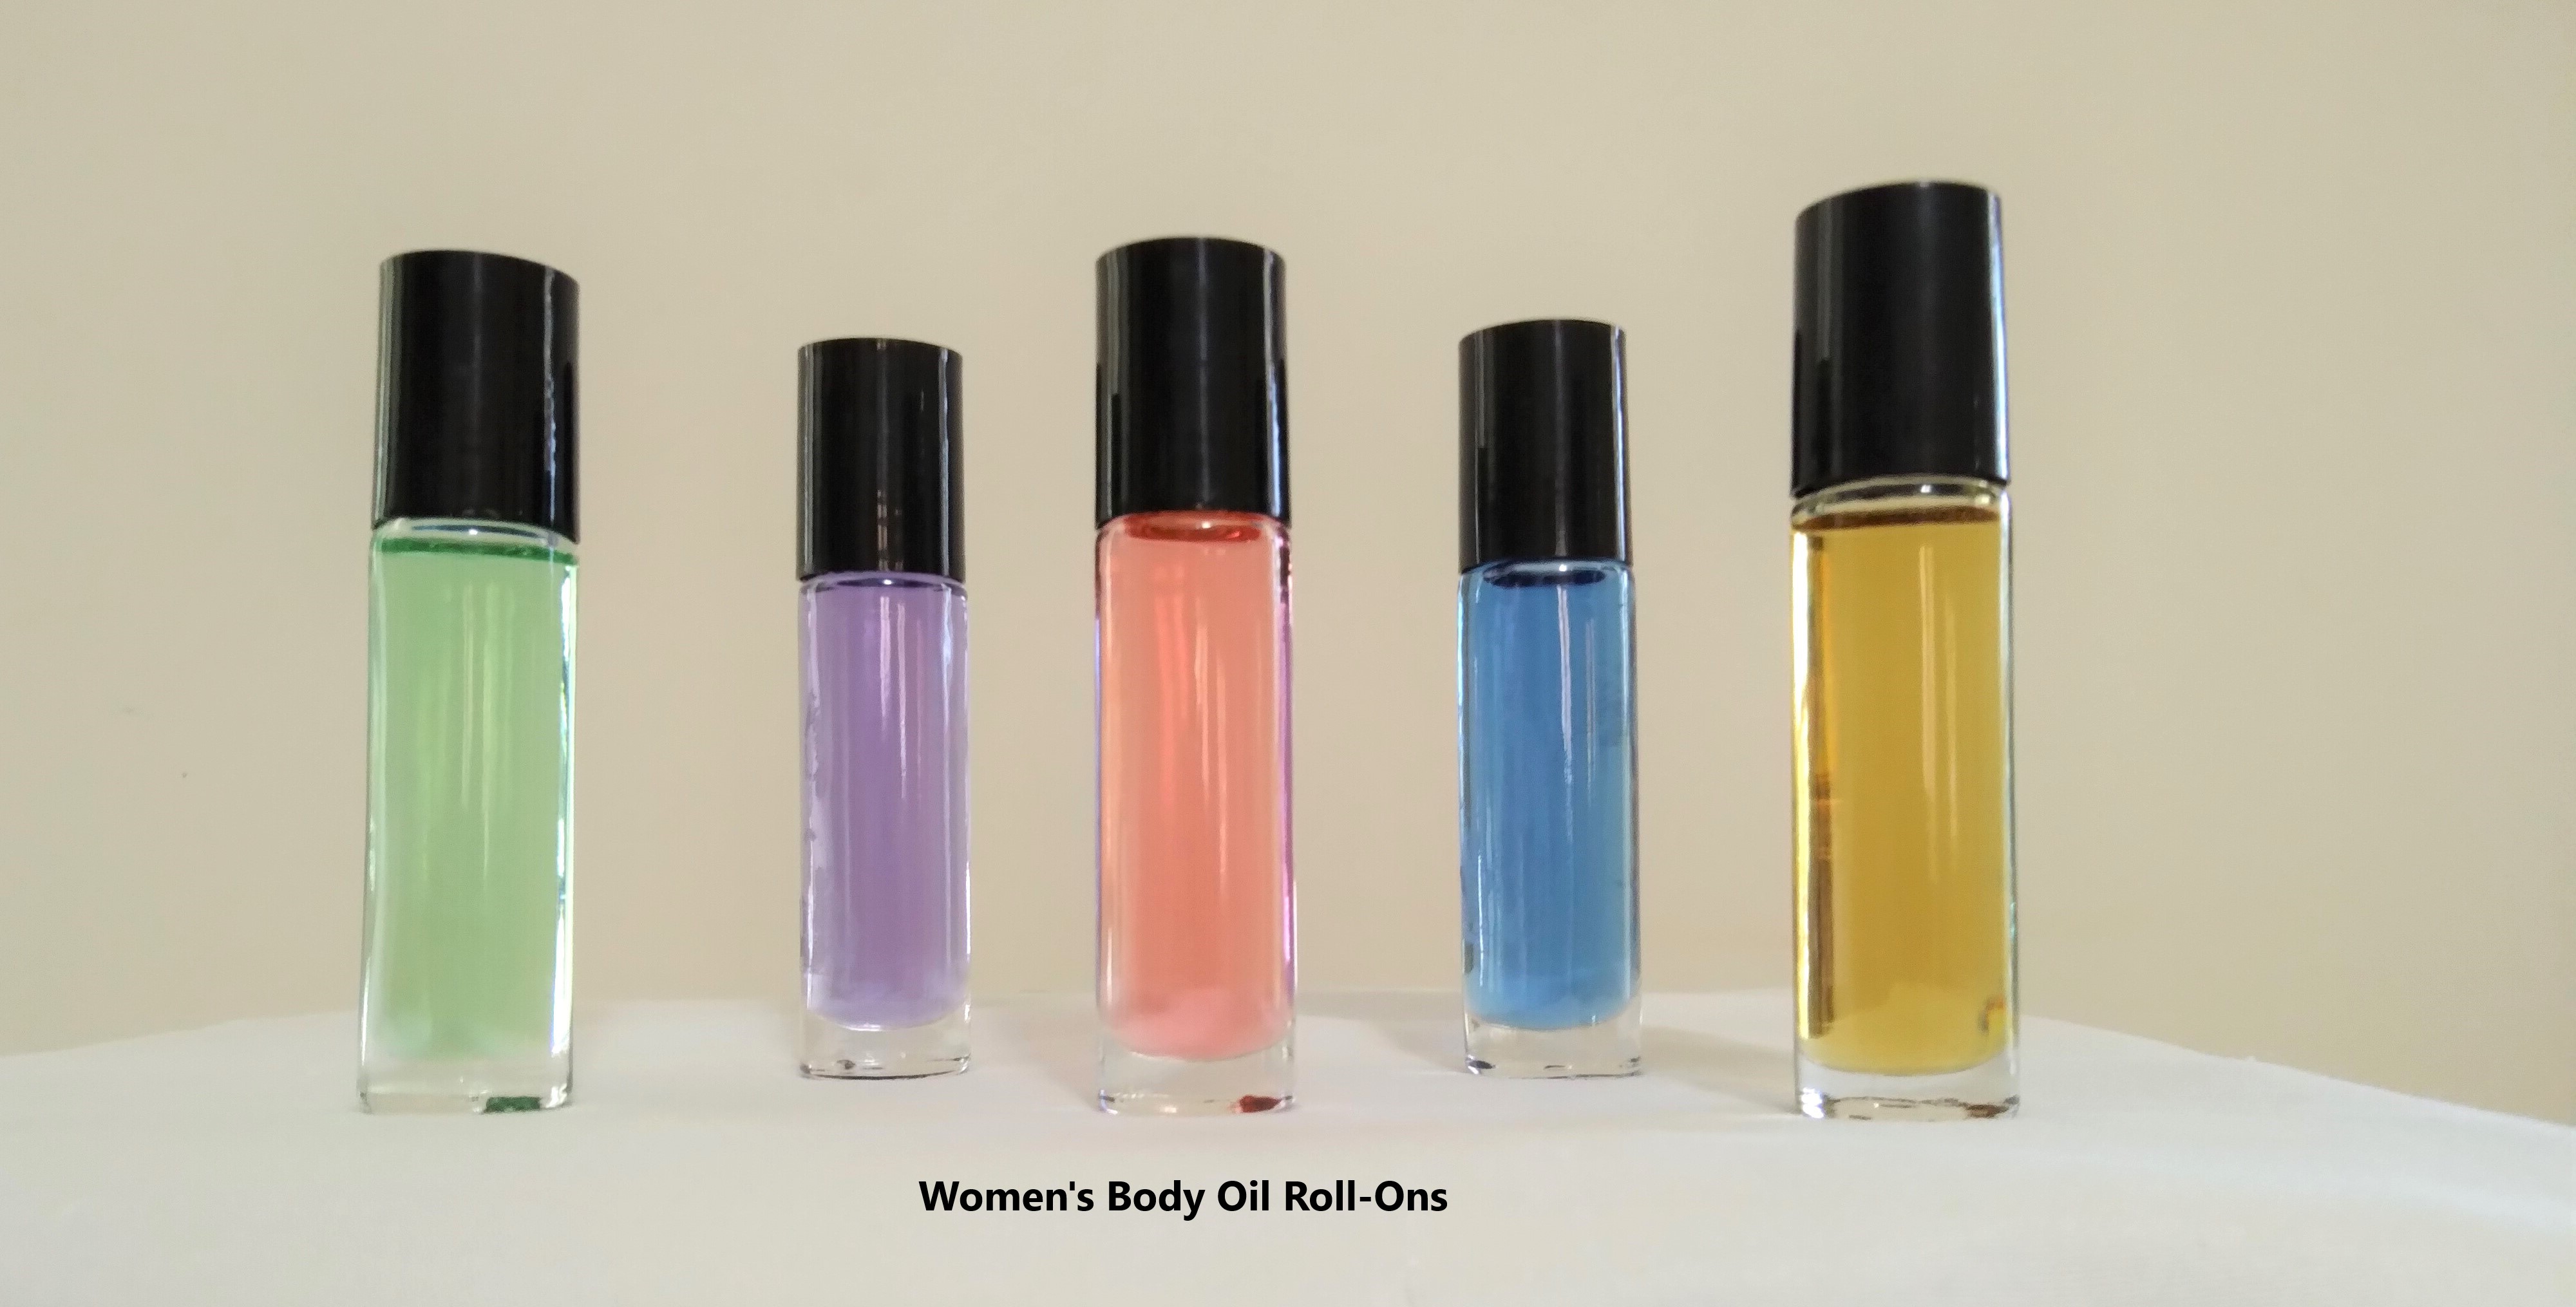 Women's Body Oils